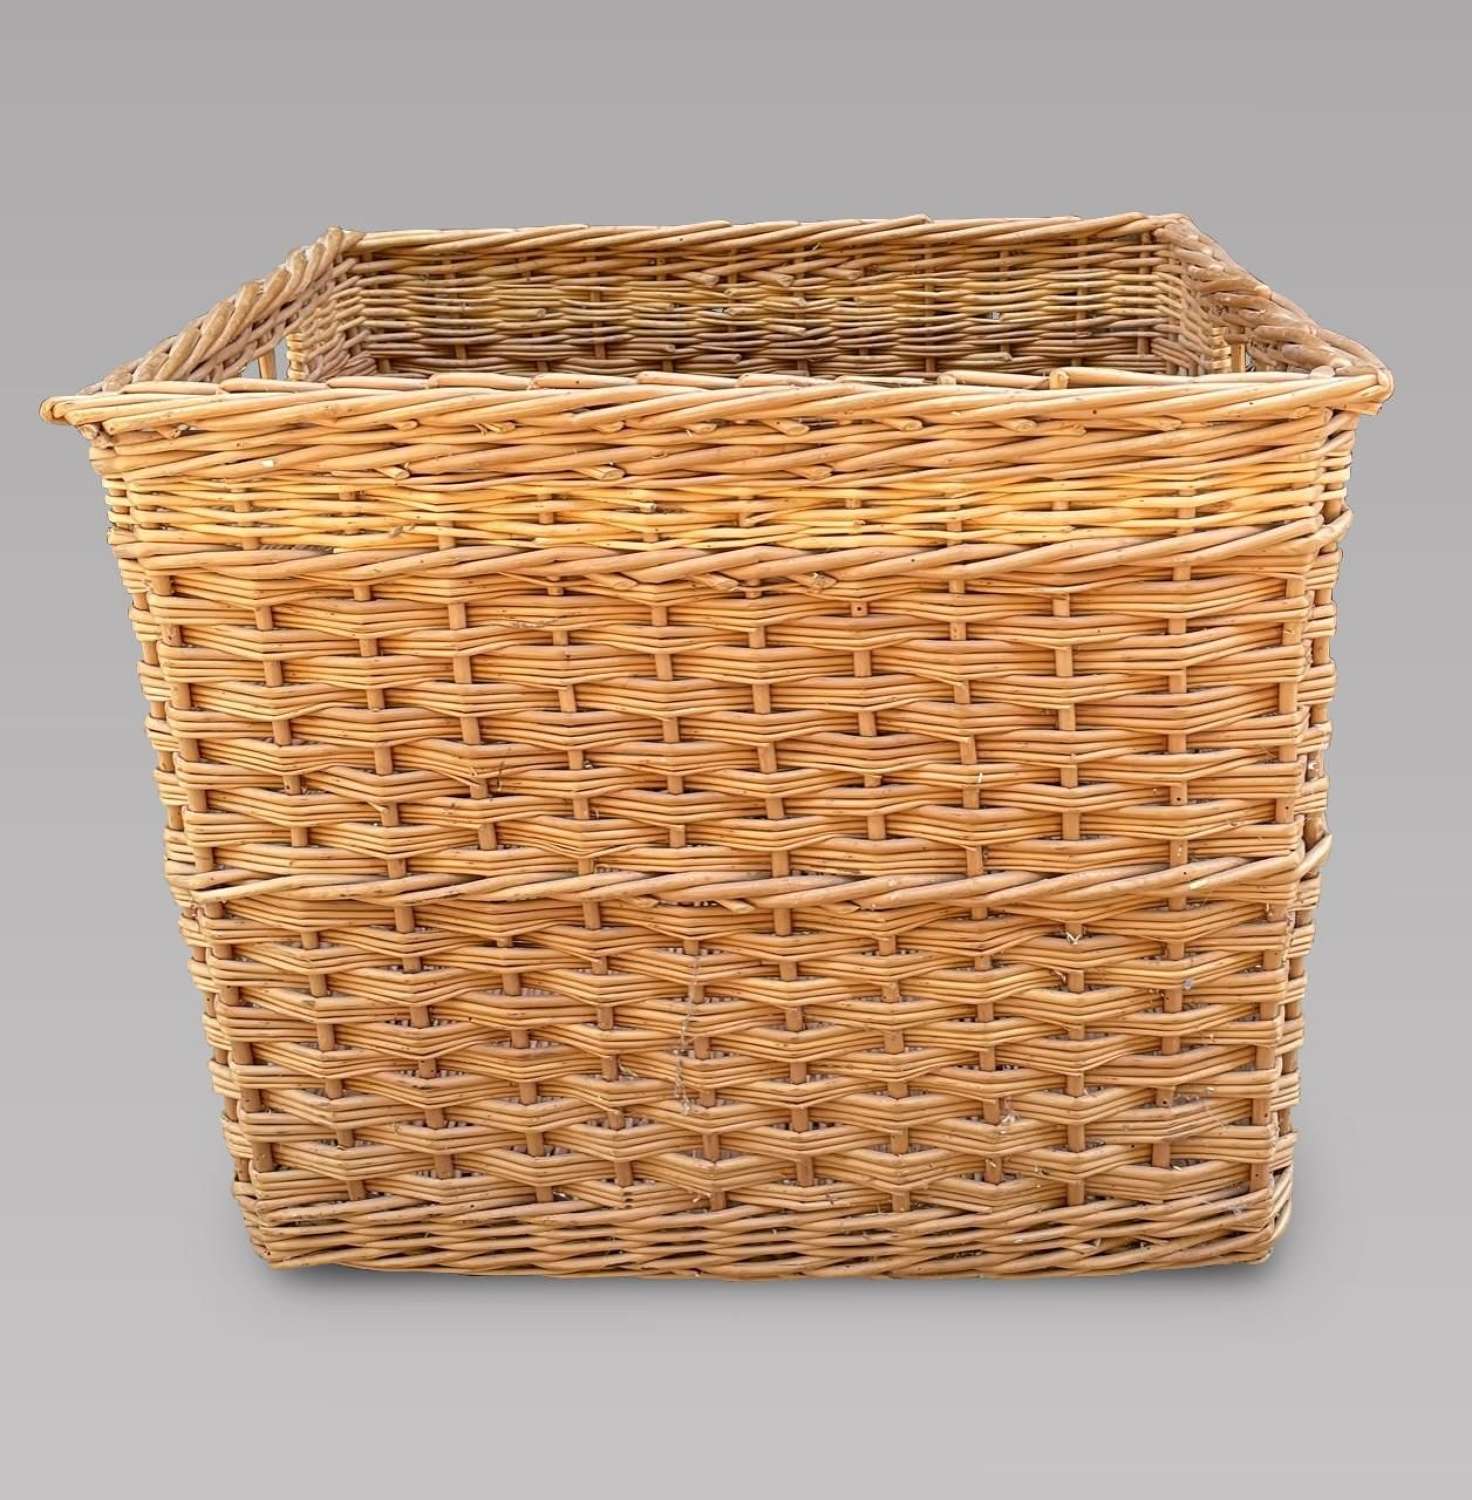 A Large Square Wicker Log Basket